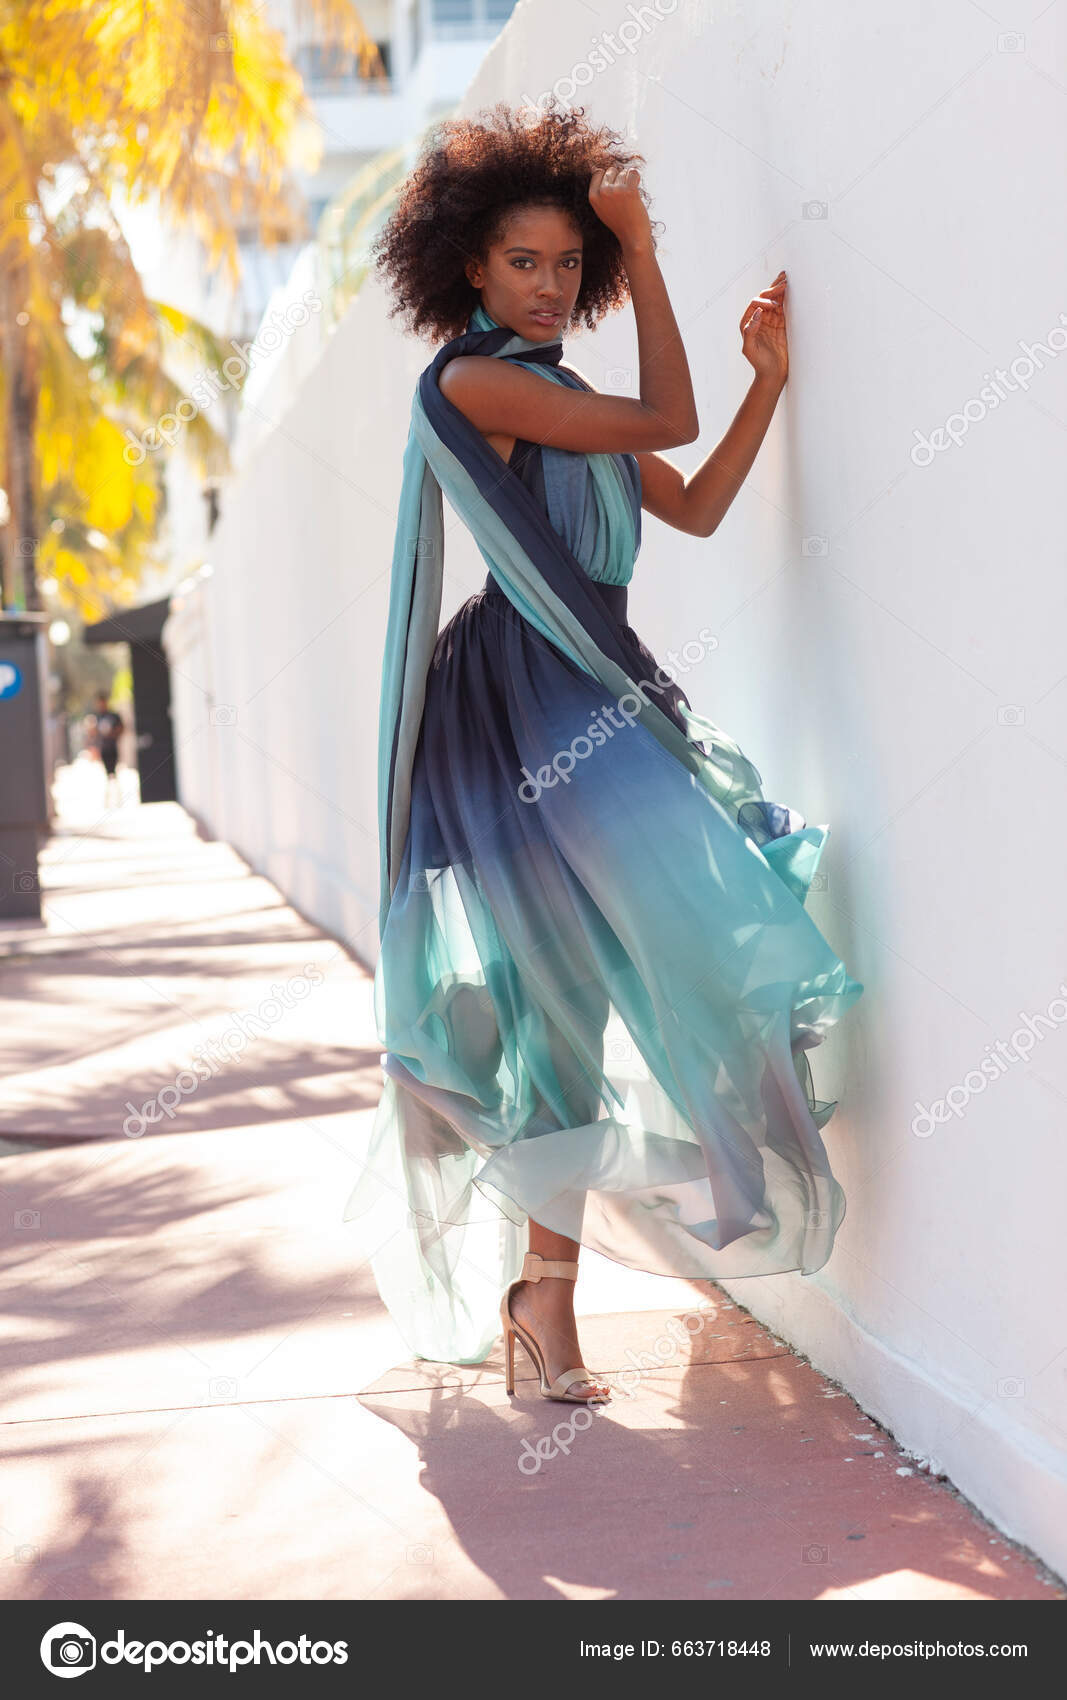 https://st5.depositphotos.com/2597299/66371/i/1600/depositphotos_663718448-stock-photo-very-beautiful-female-modern-outfit.jpg